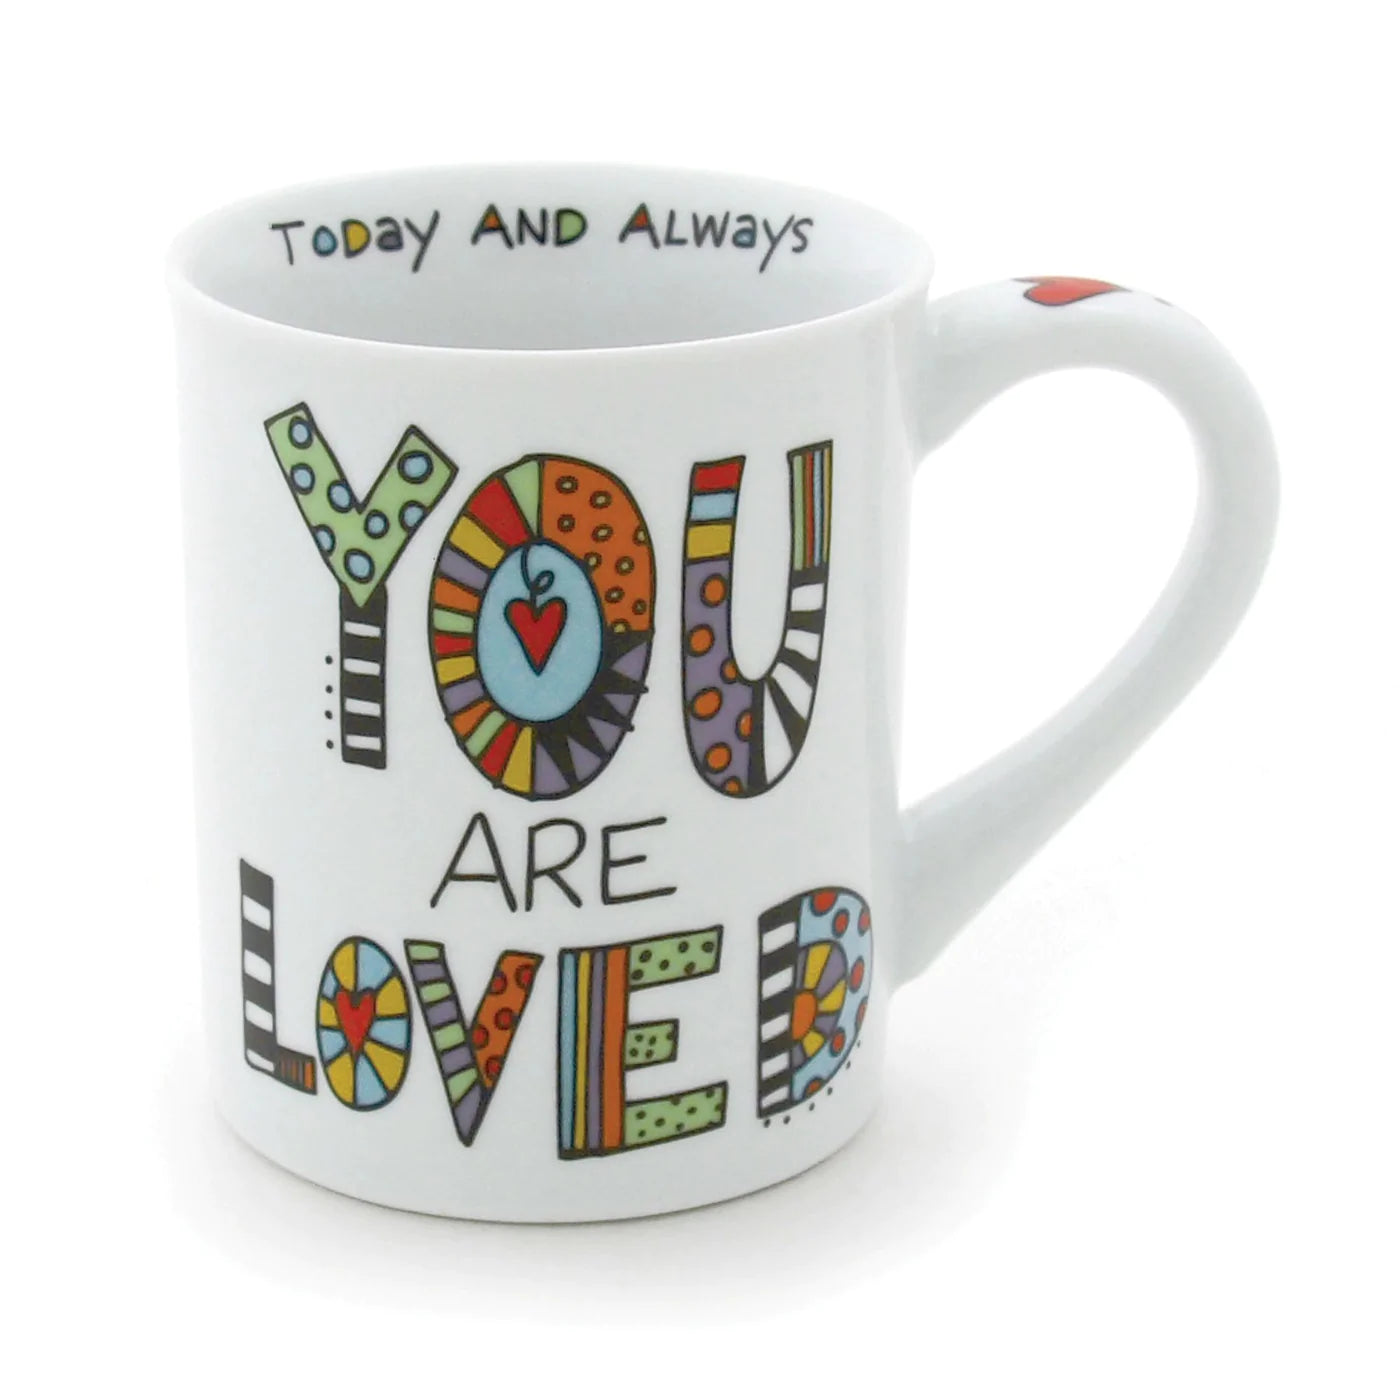 You Are Loved Mug